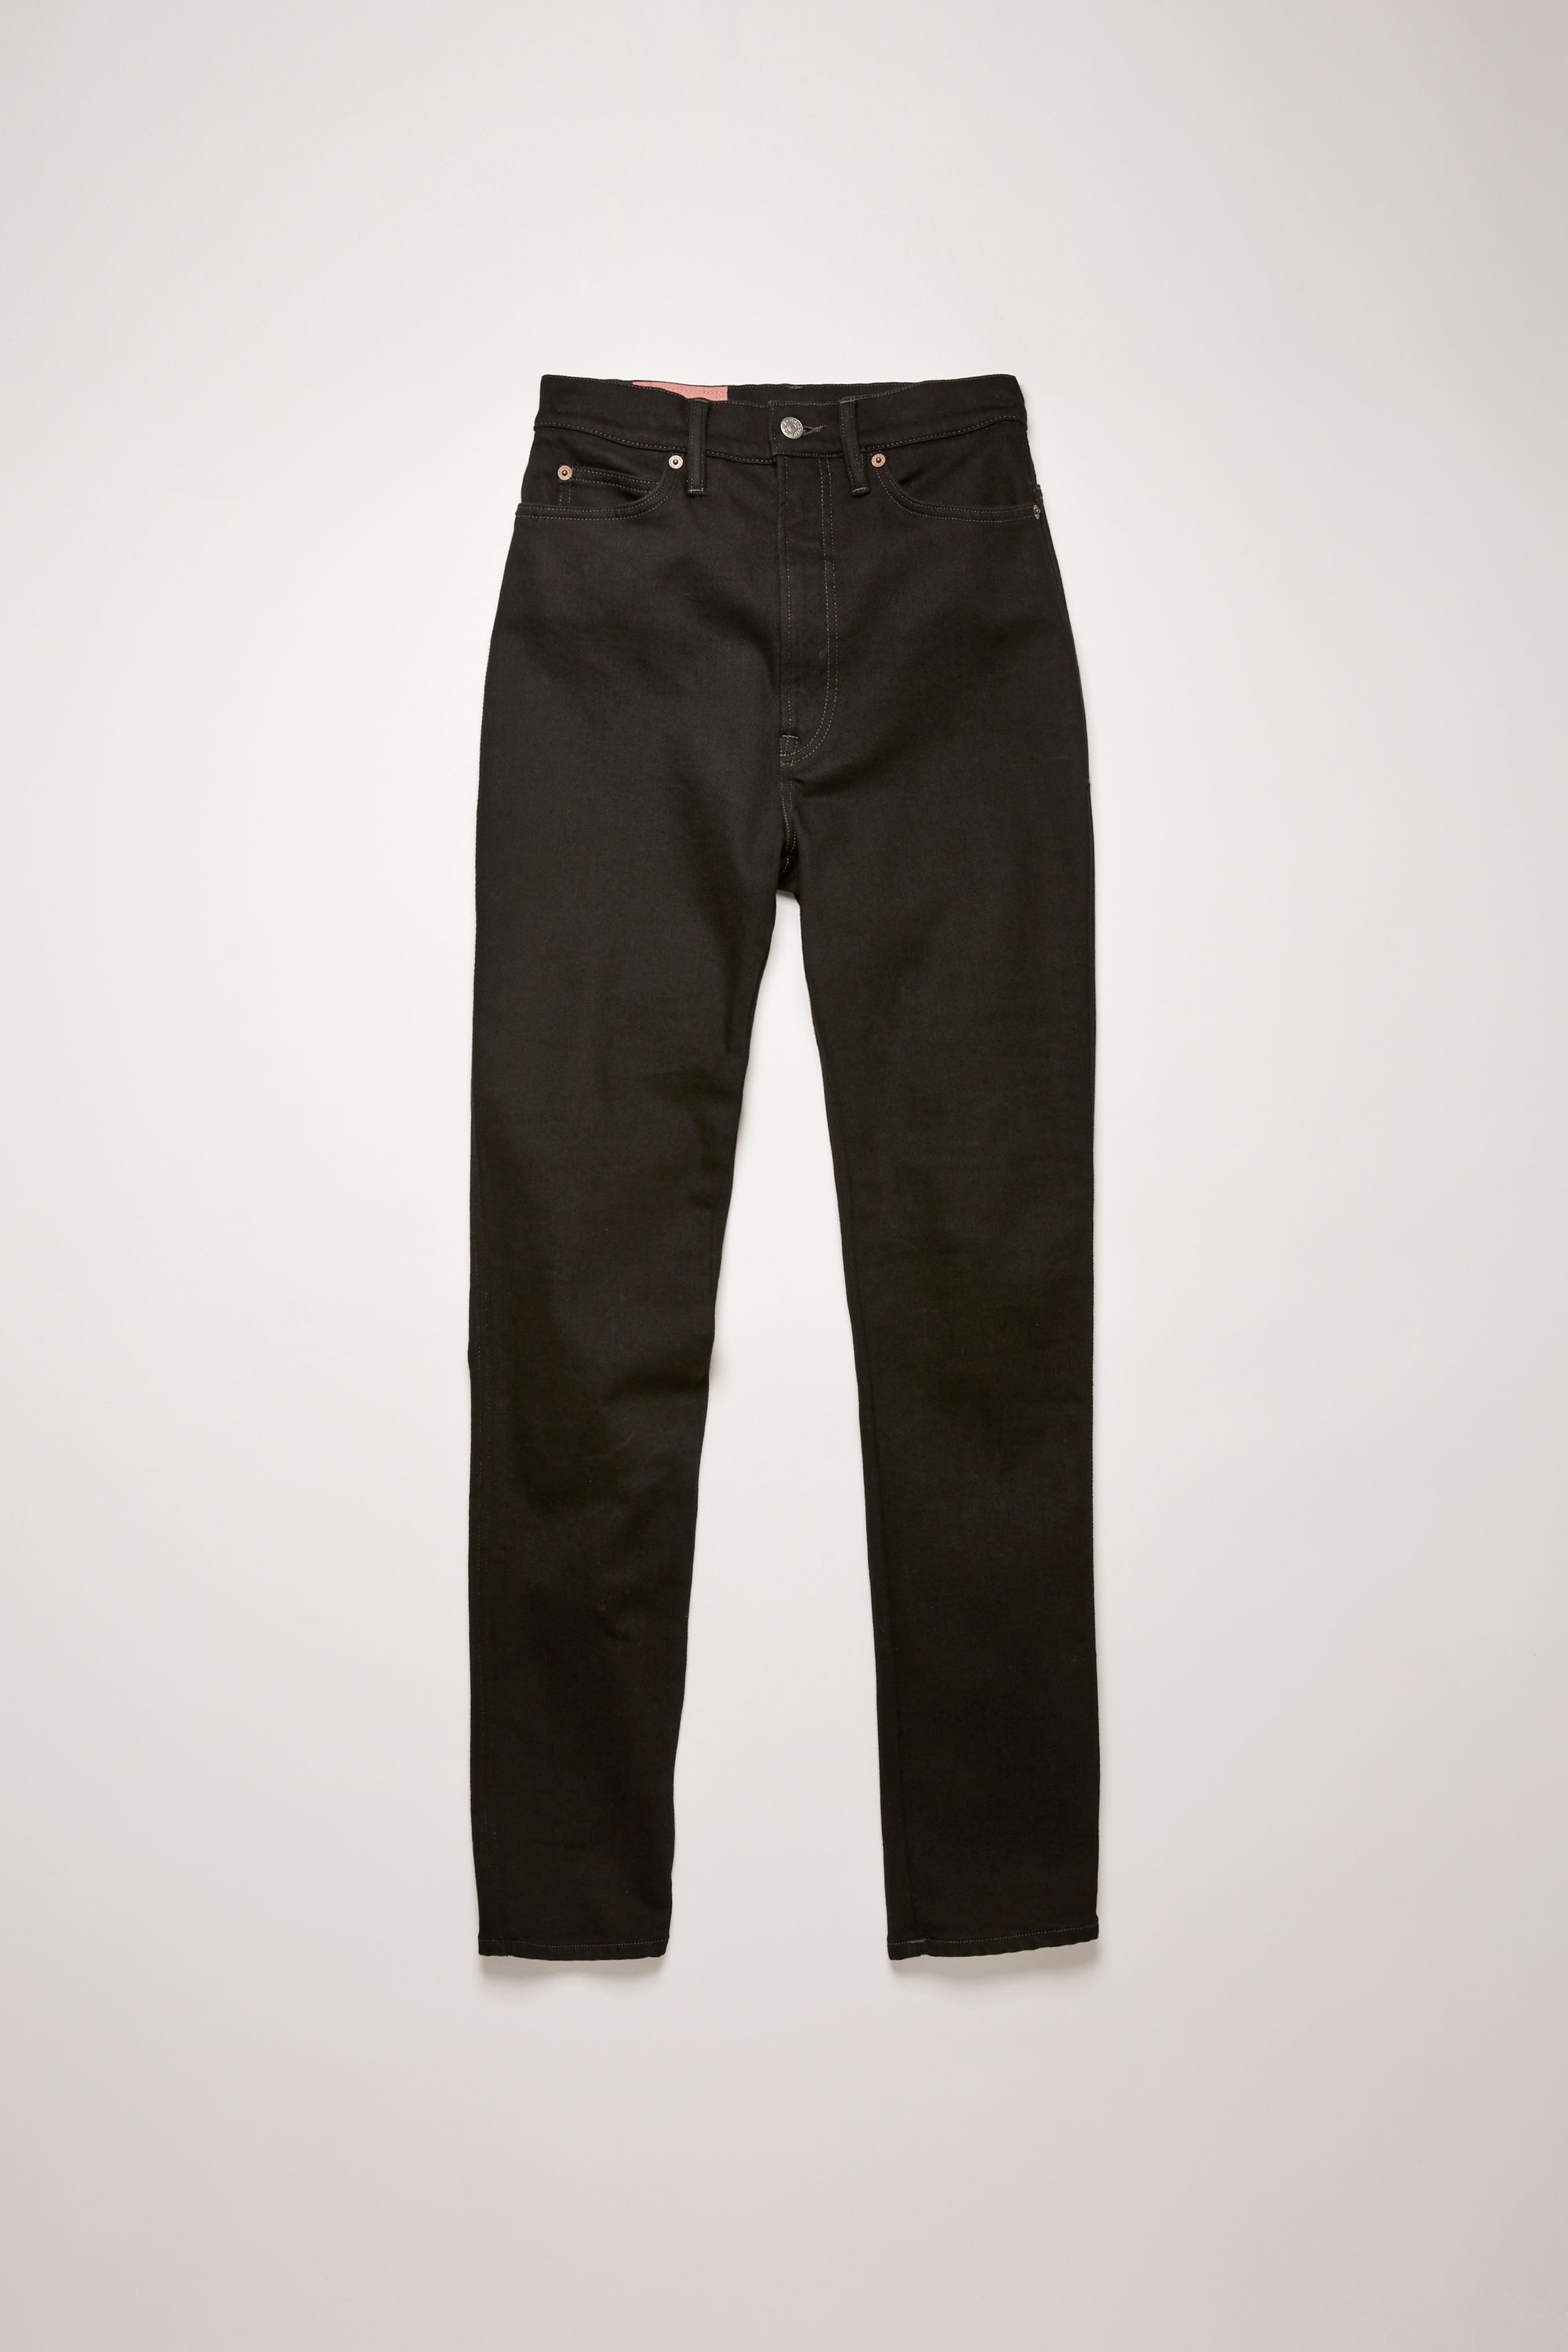 Acne studios 1978 vintage black jeans-